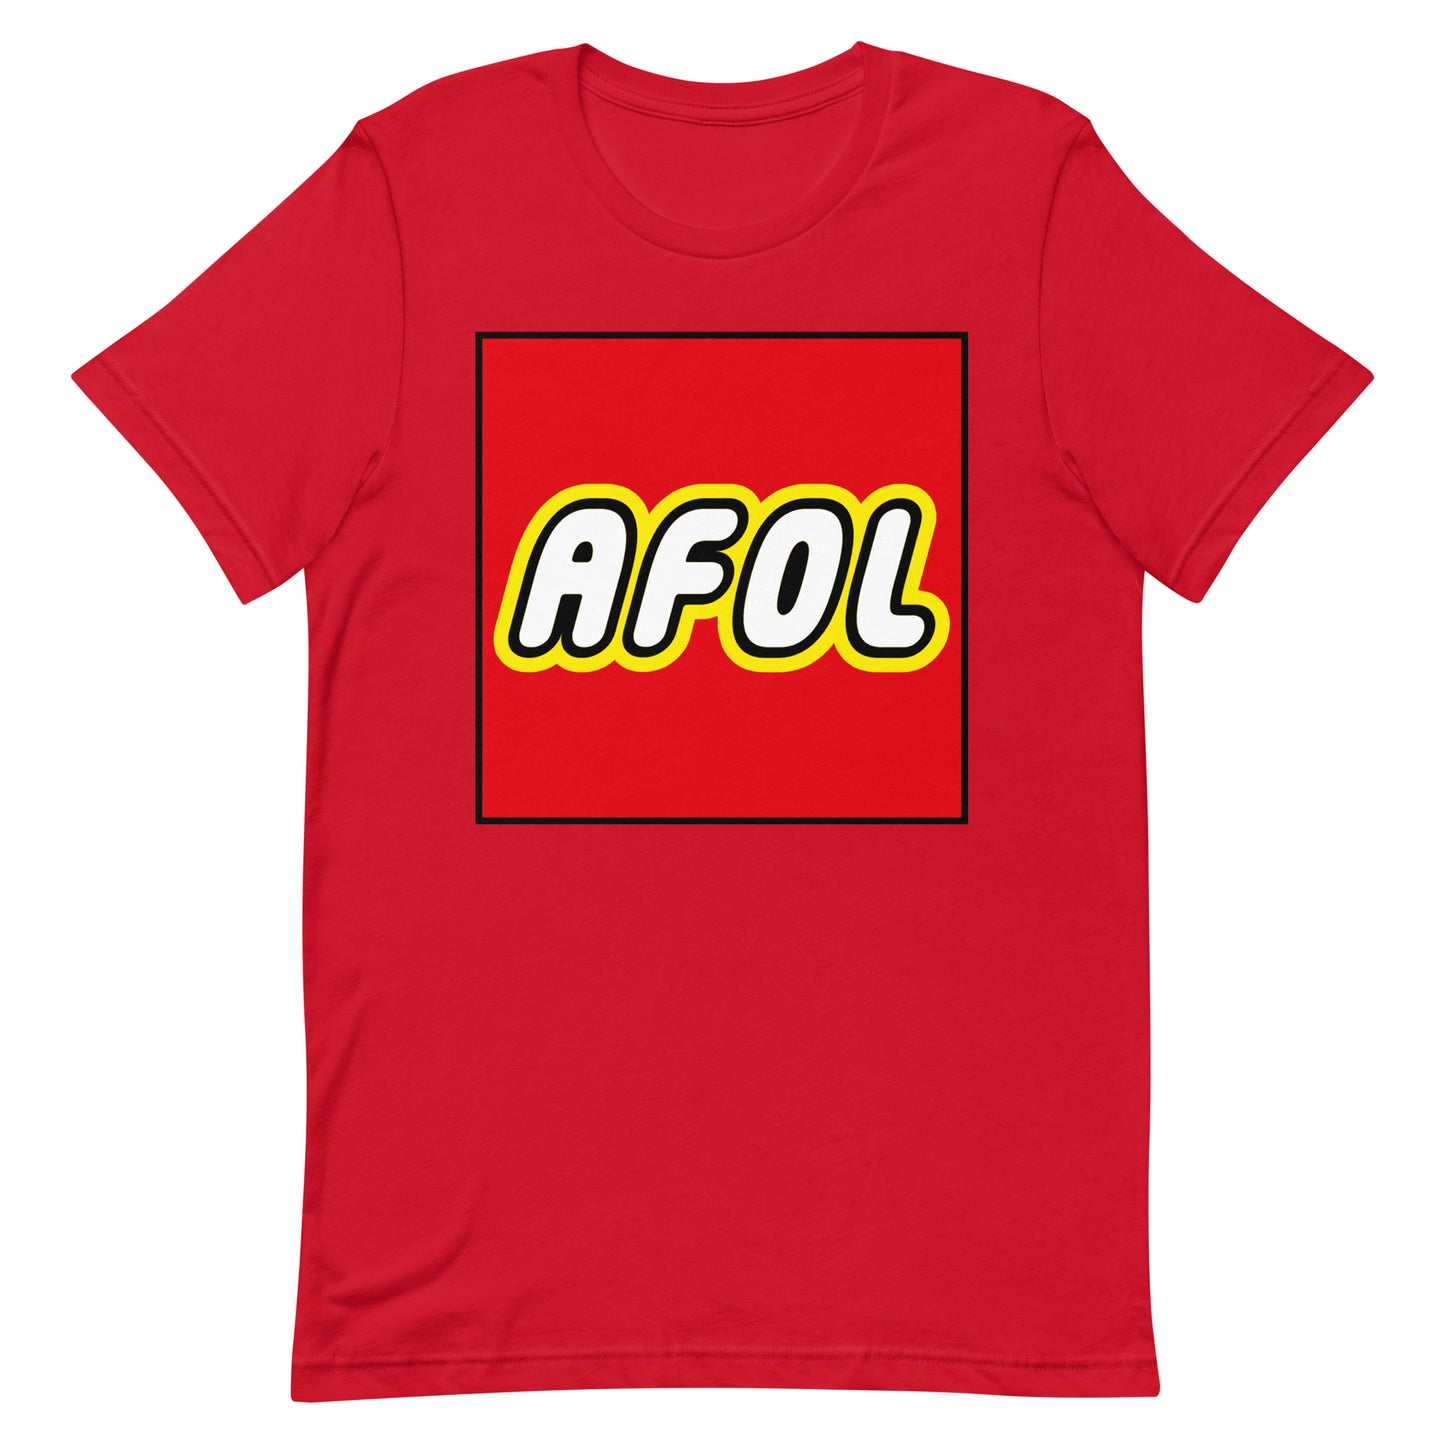 AFOL (Adult Fan of LEGO) Graphic Tee